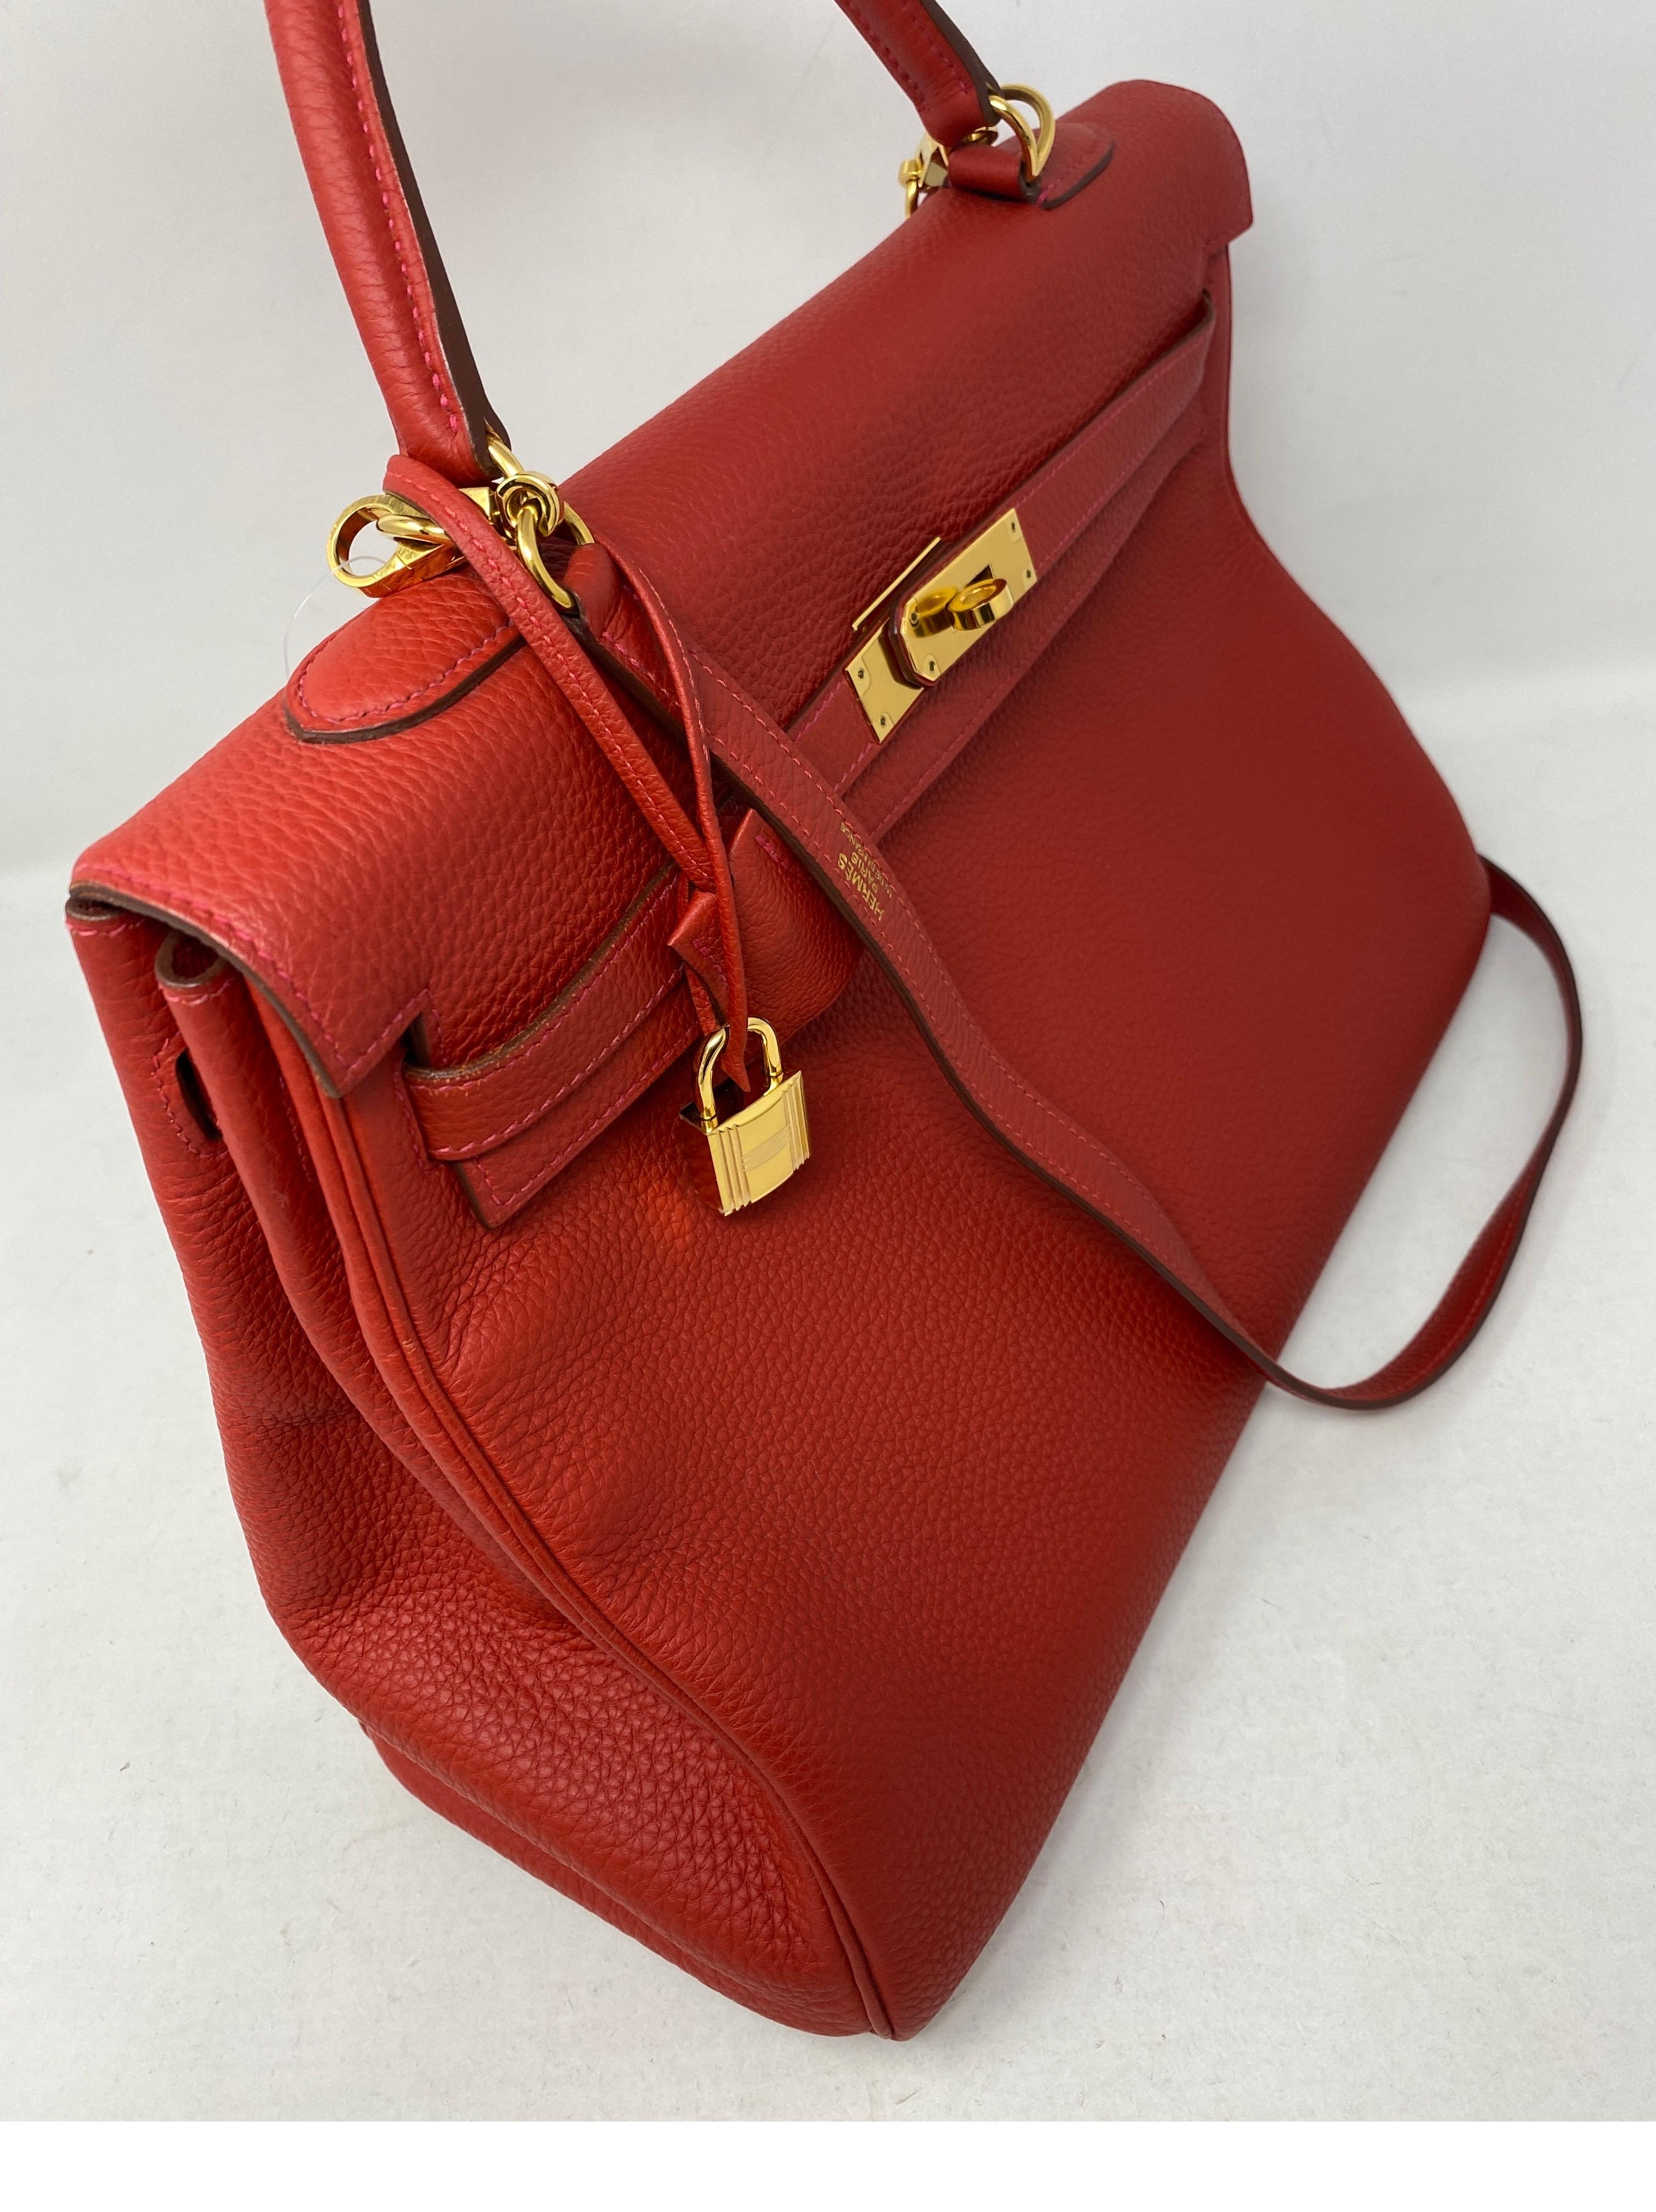 Women's or Men's Hermes Kelly Vermilion Red 35 Bag